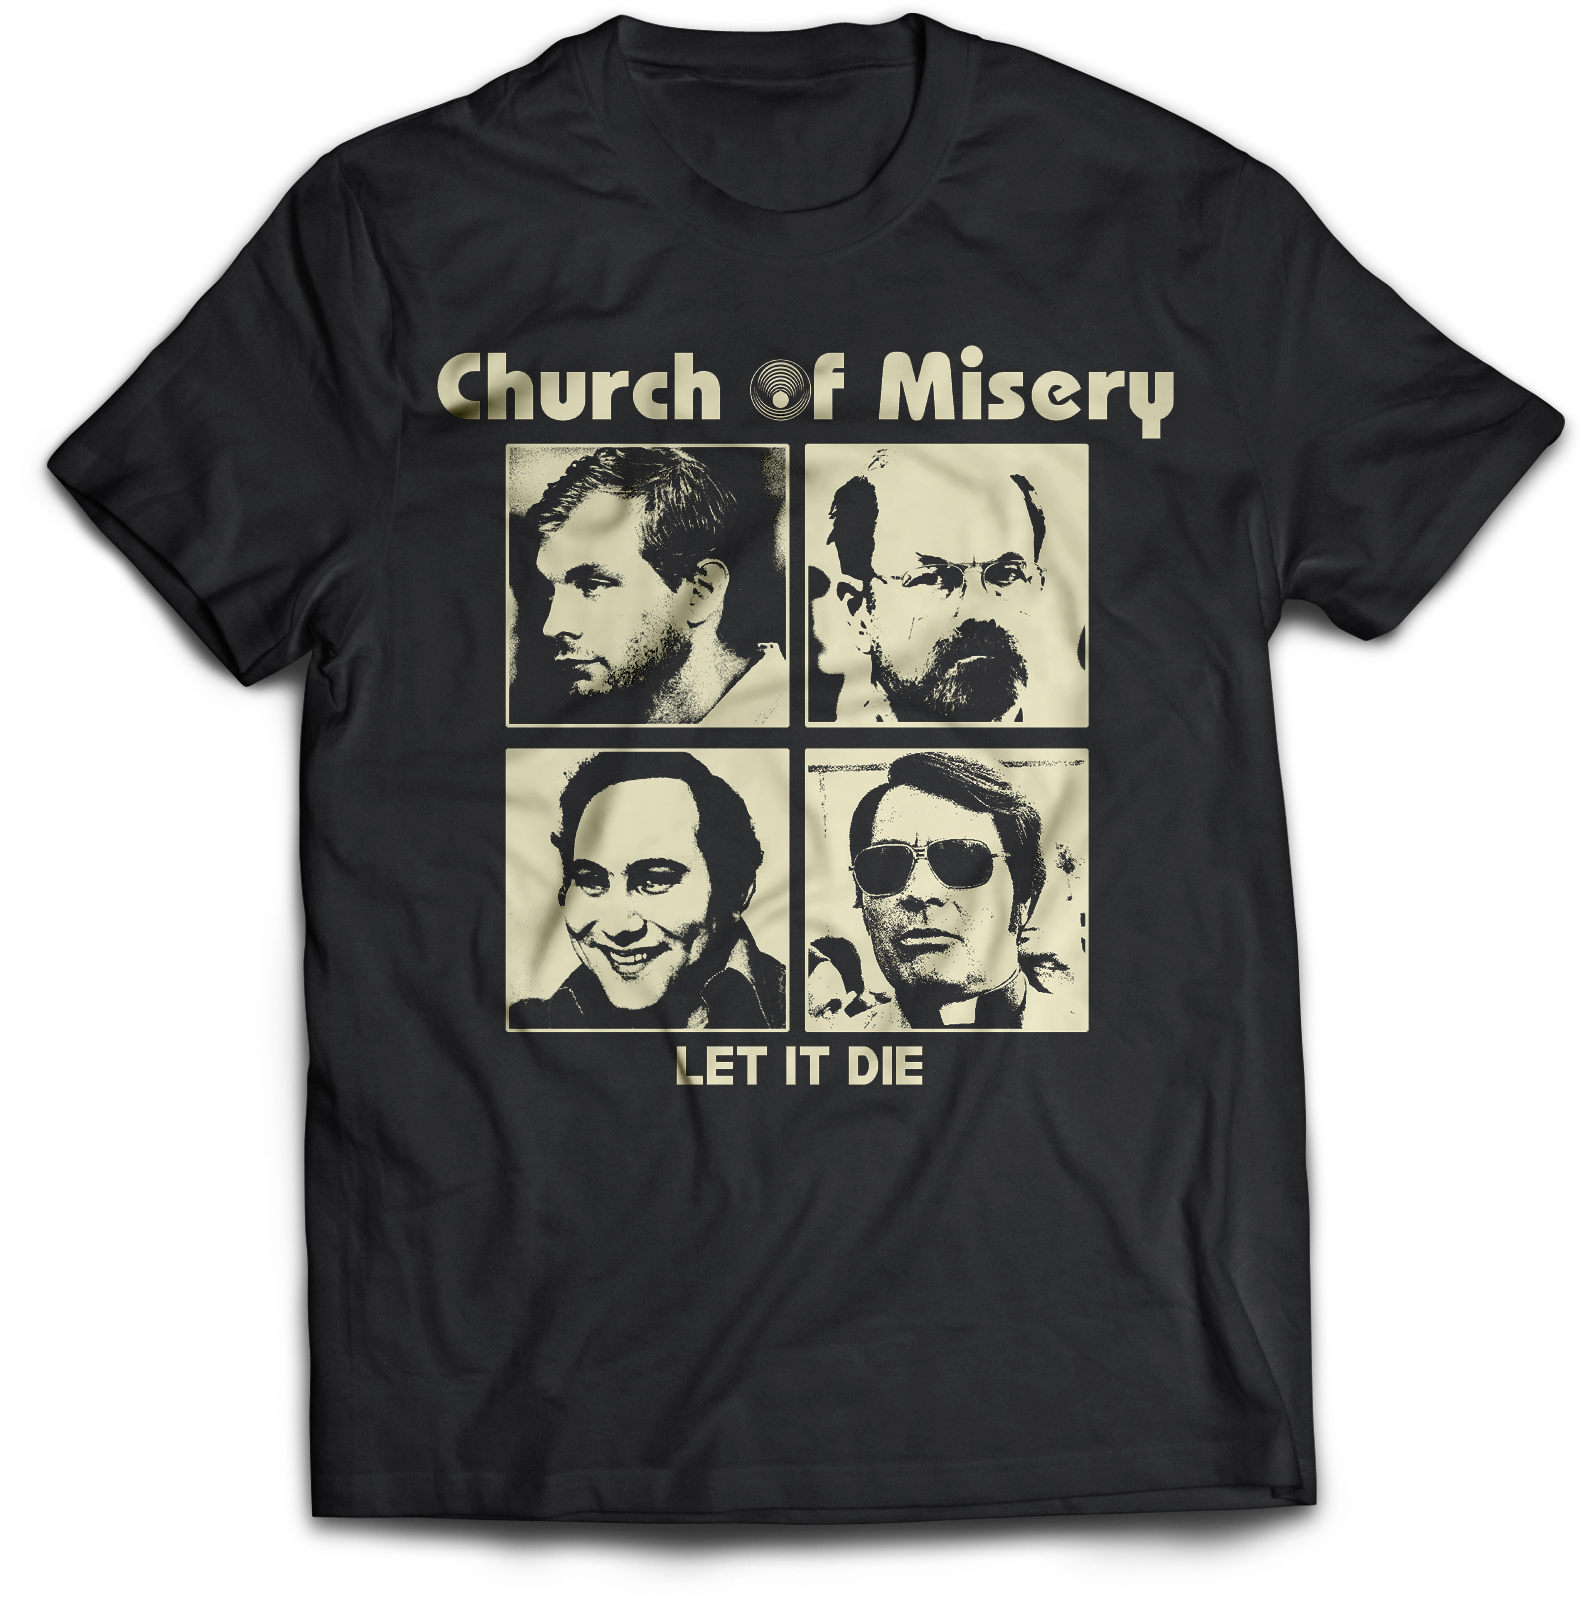 CHURCH OF MISERY "LET IT DIE" T-SHIRT